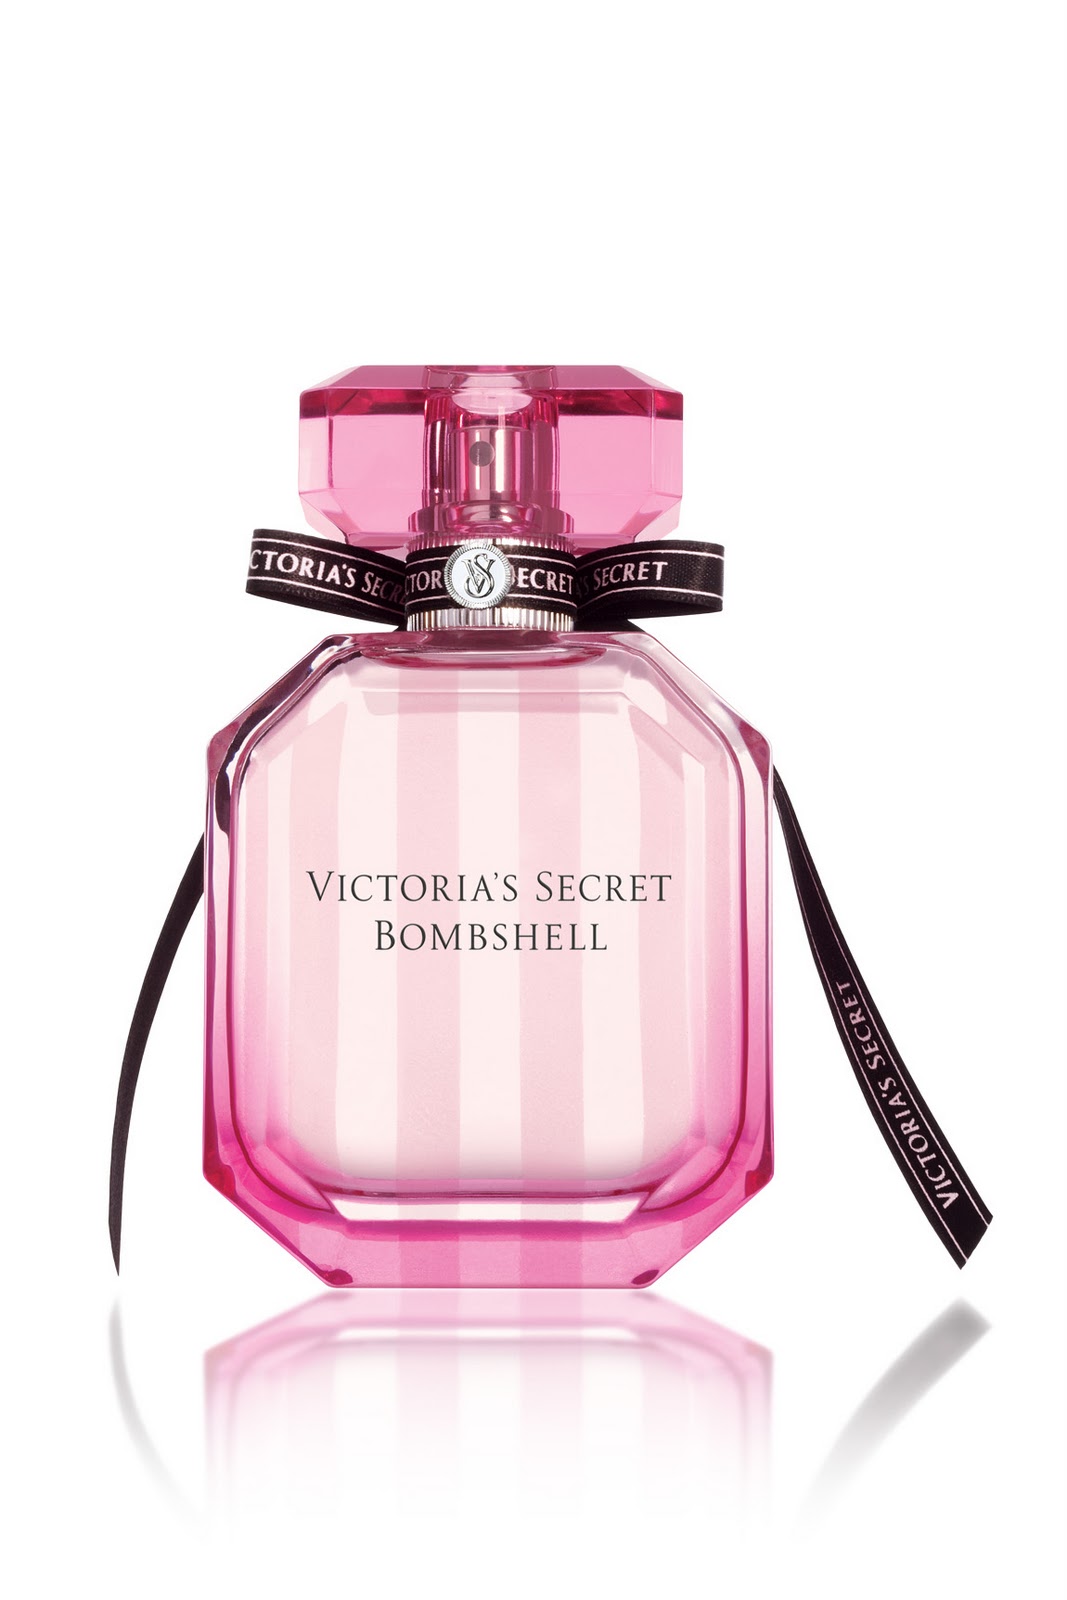 The Beauty Alchemist: Victoria's Secret Black ( Pink) Friday Specials